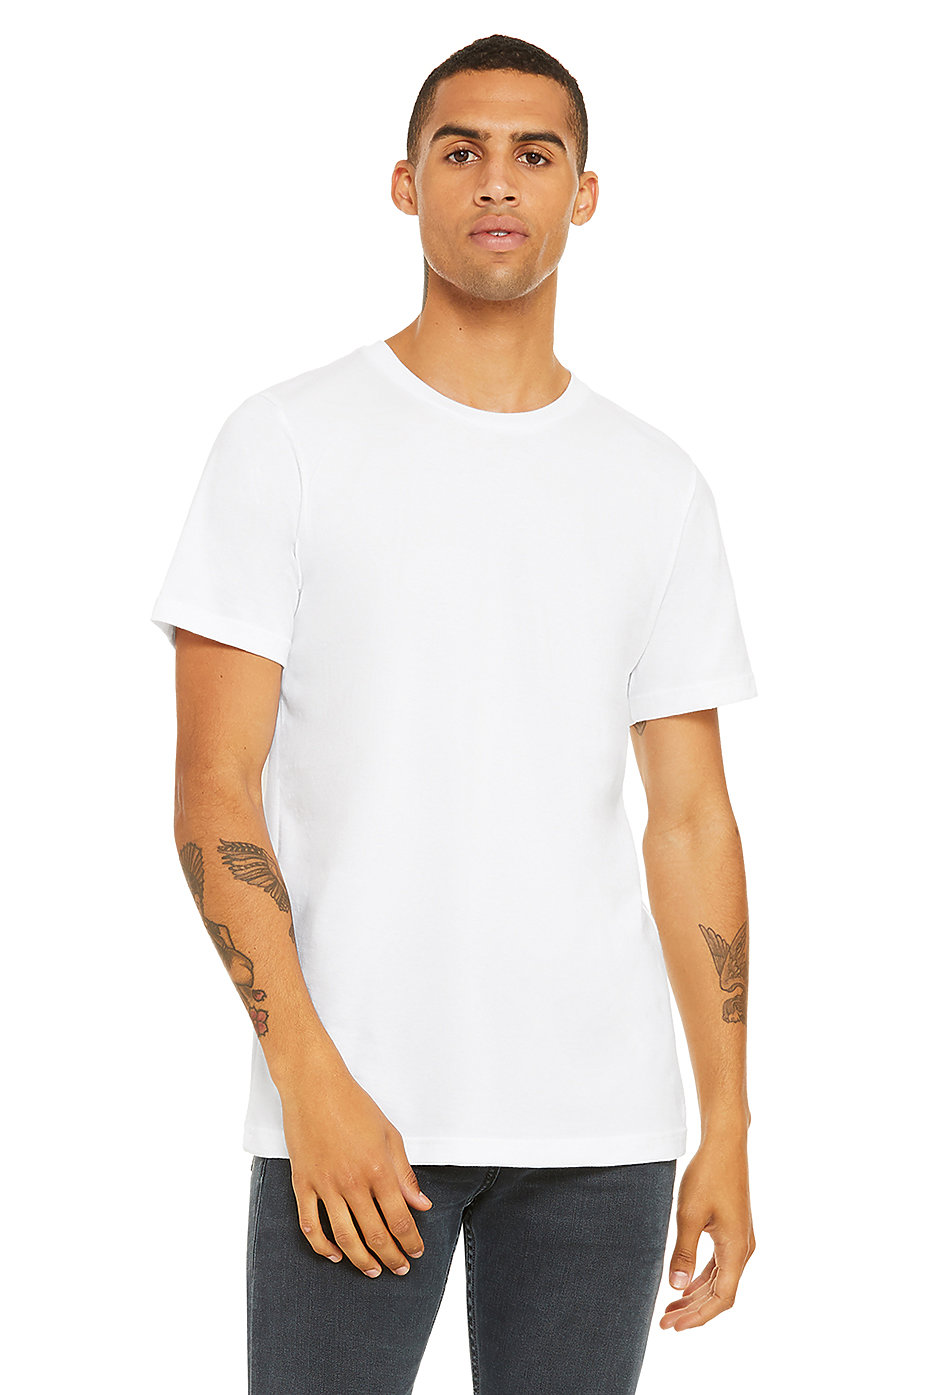 Stradivarius T-shirt White M discount 91% WOMEN FASHION Shirts & T-shirts Basic 